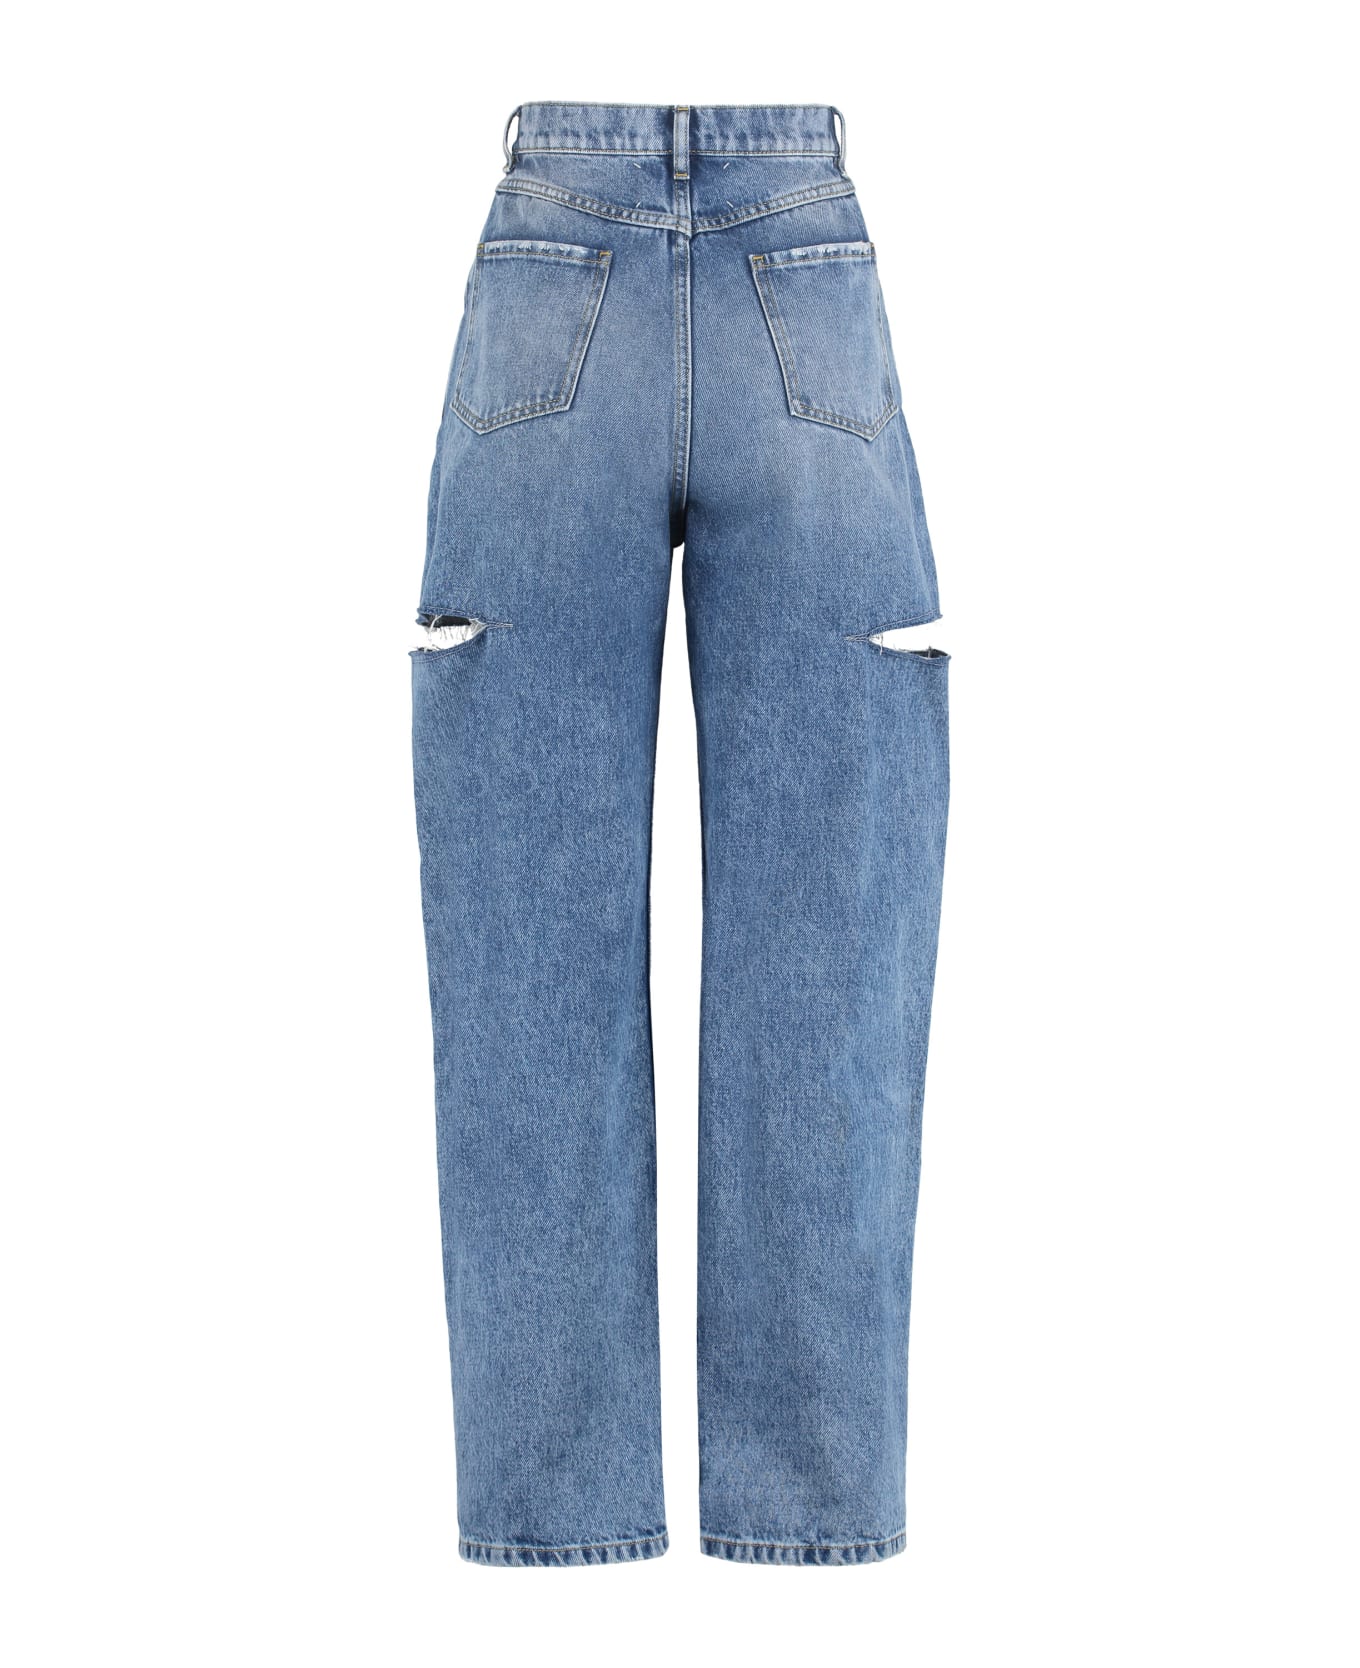 Maison Margiela Side Slit 5 Pockets Jeans - Blue デニム